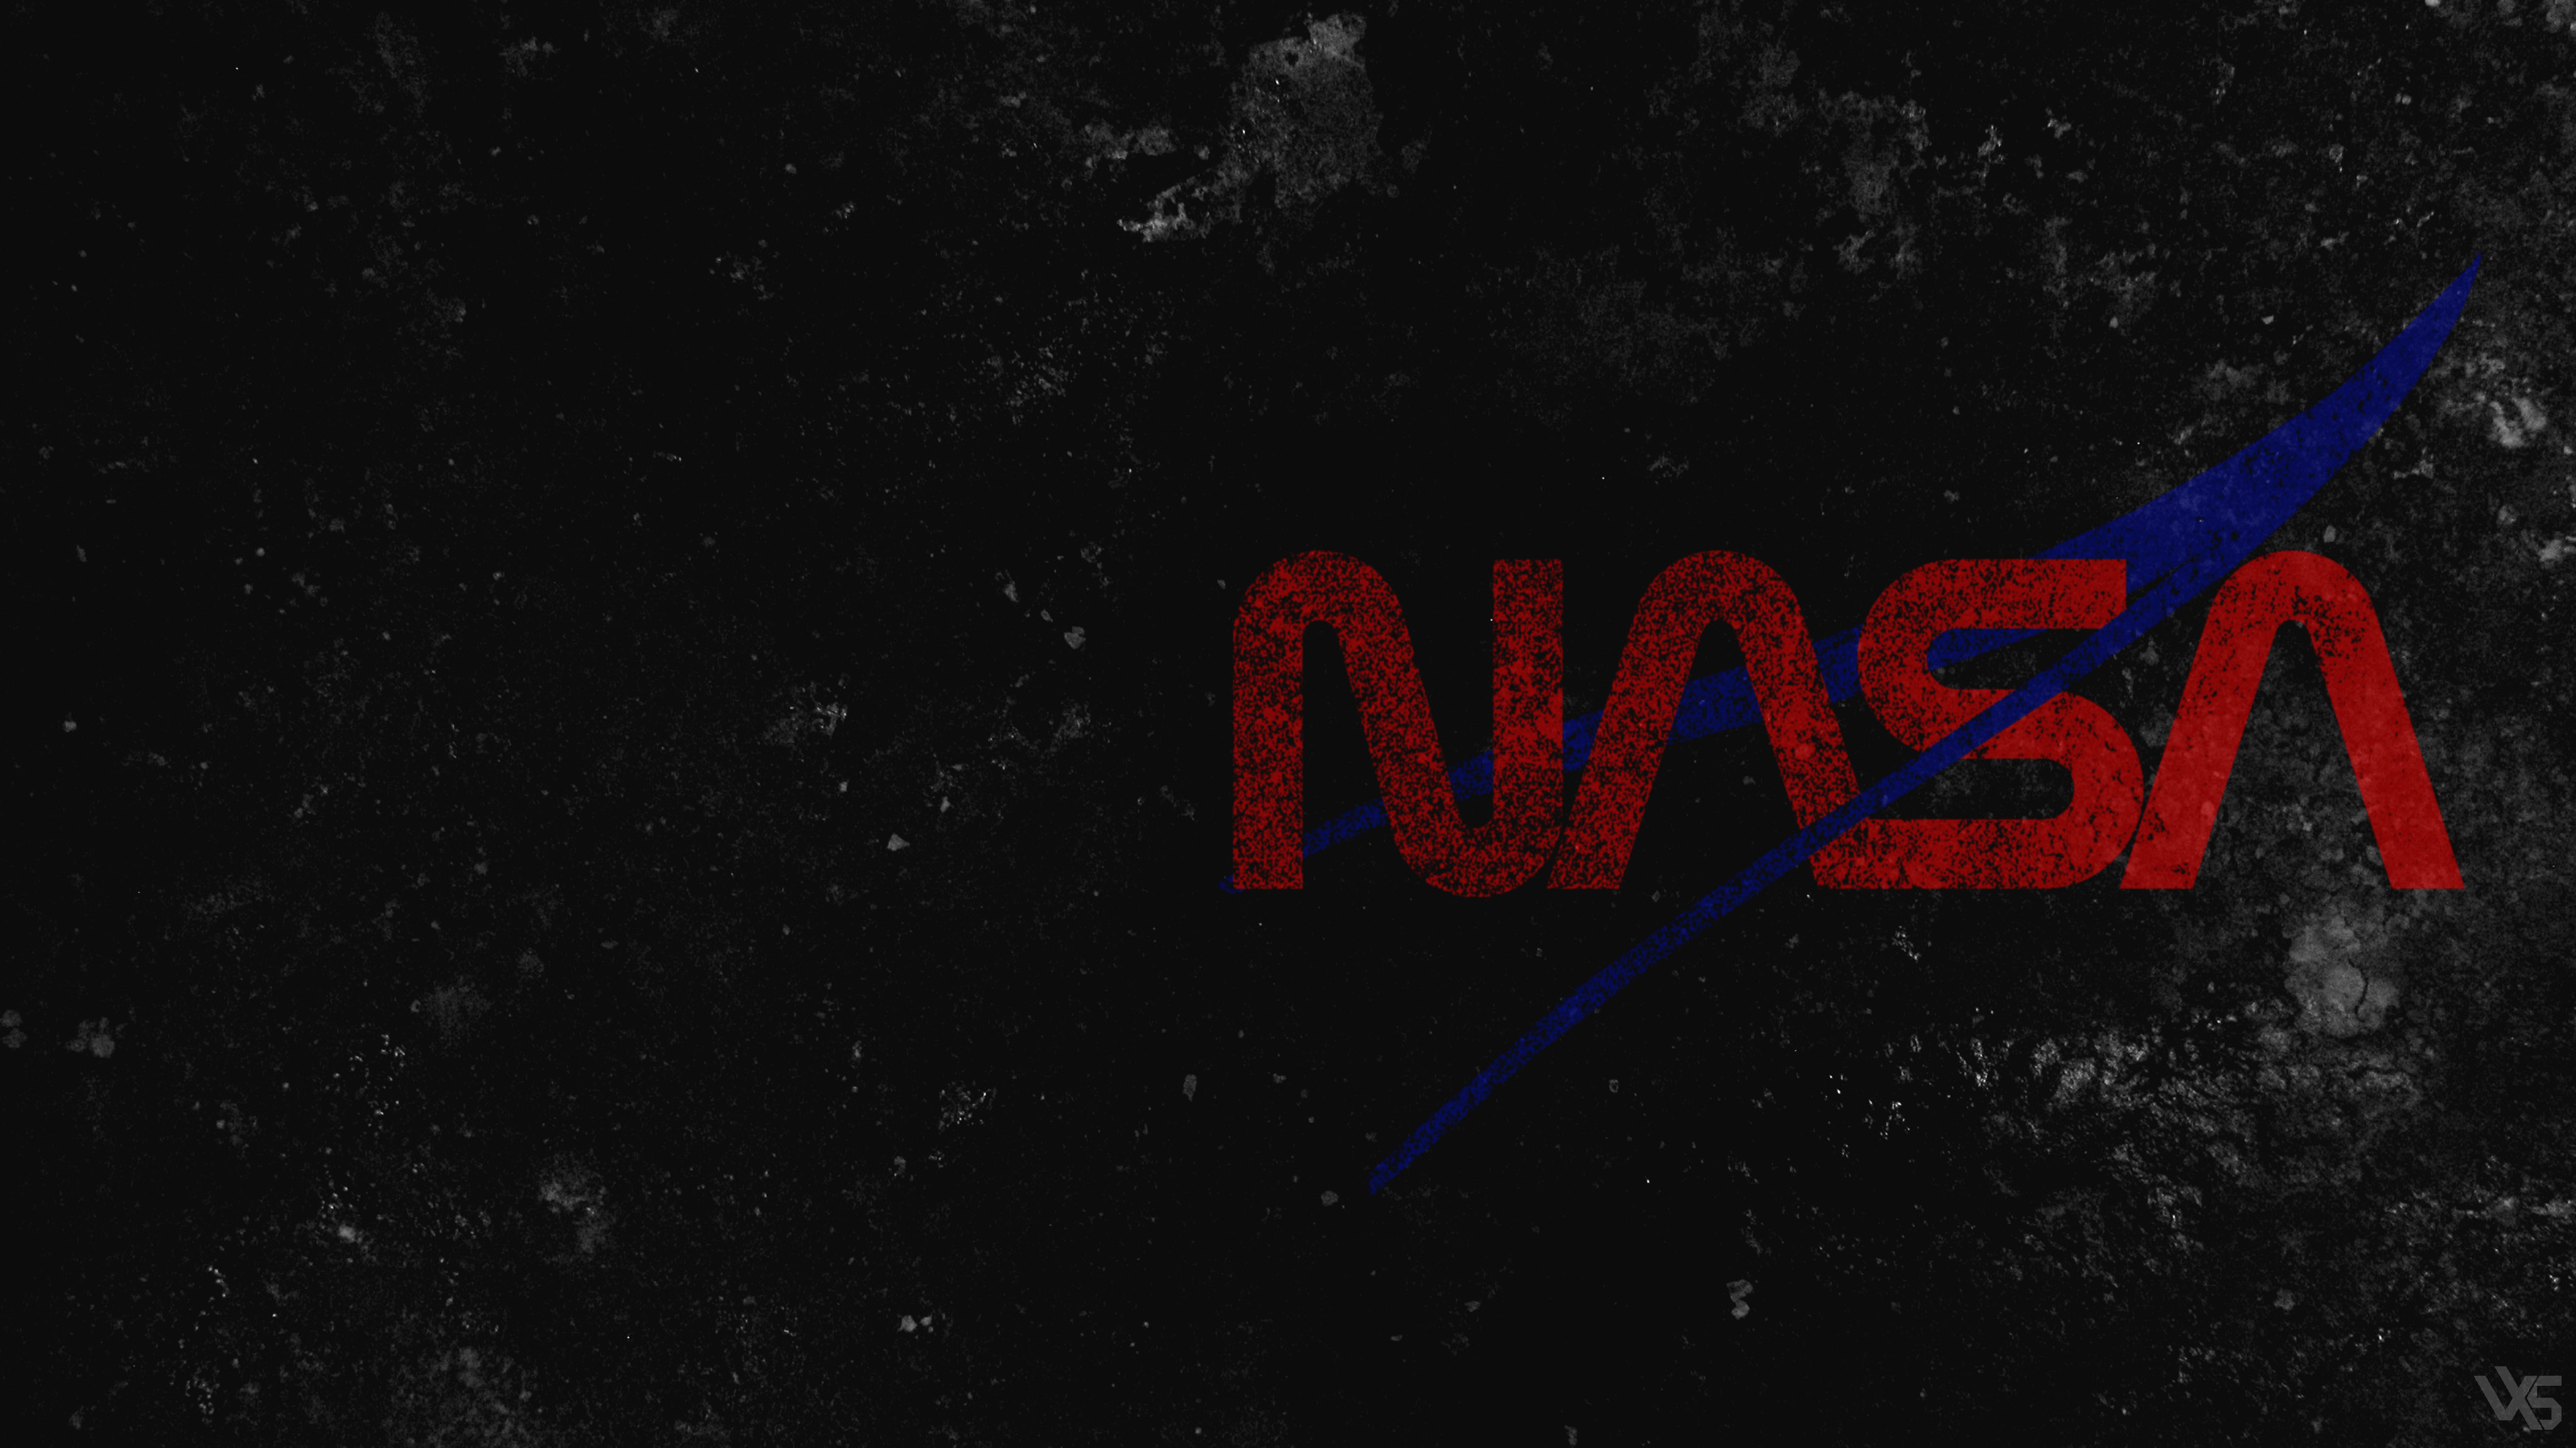 NASA Logo Wallpaper Free NASA Logo Background